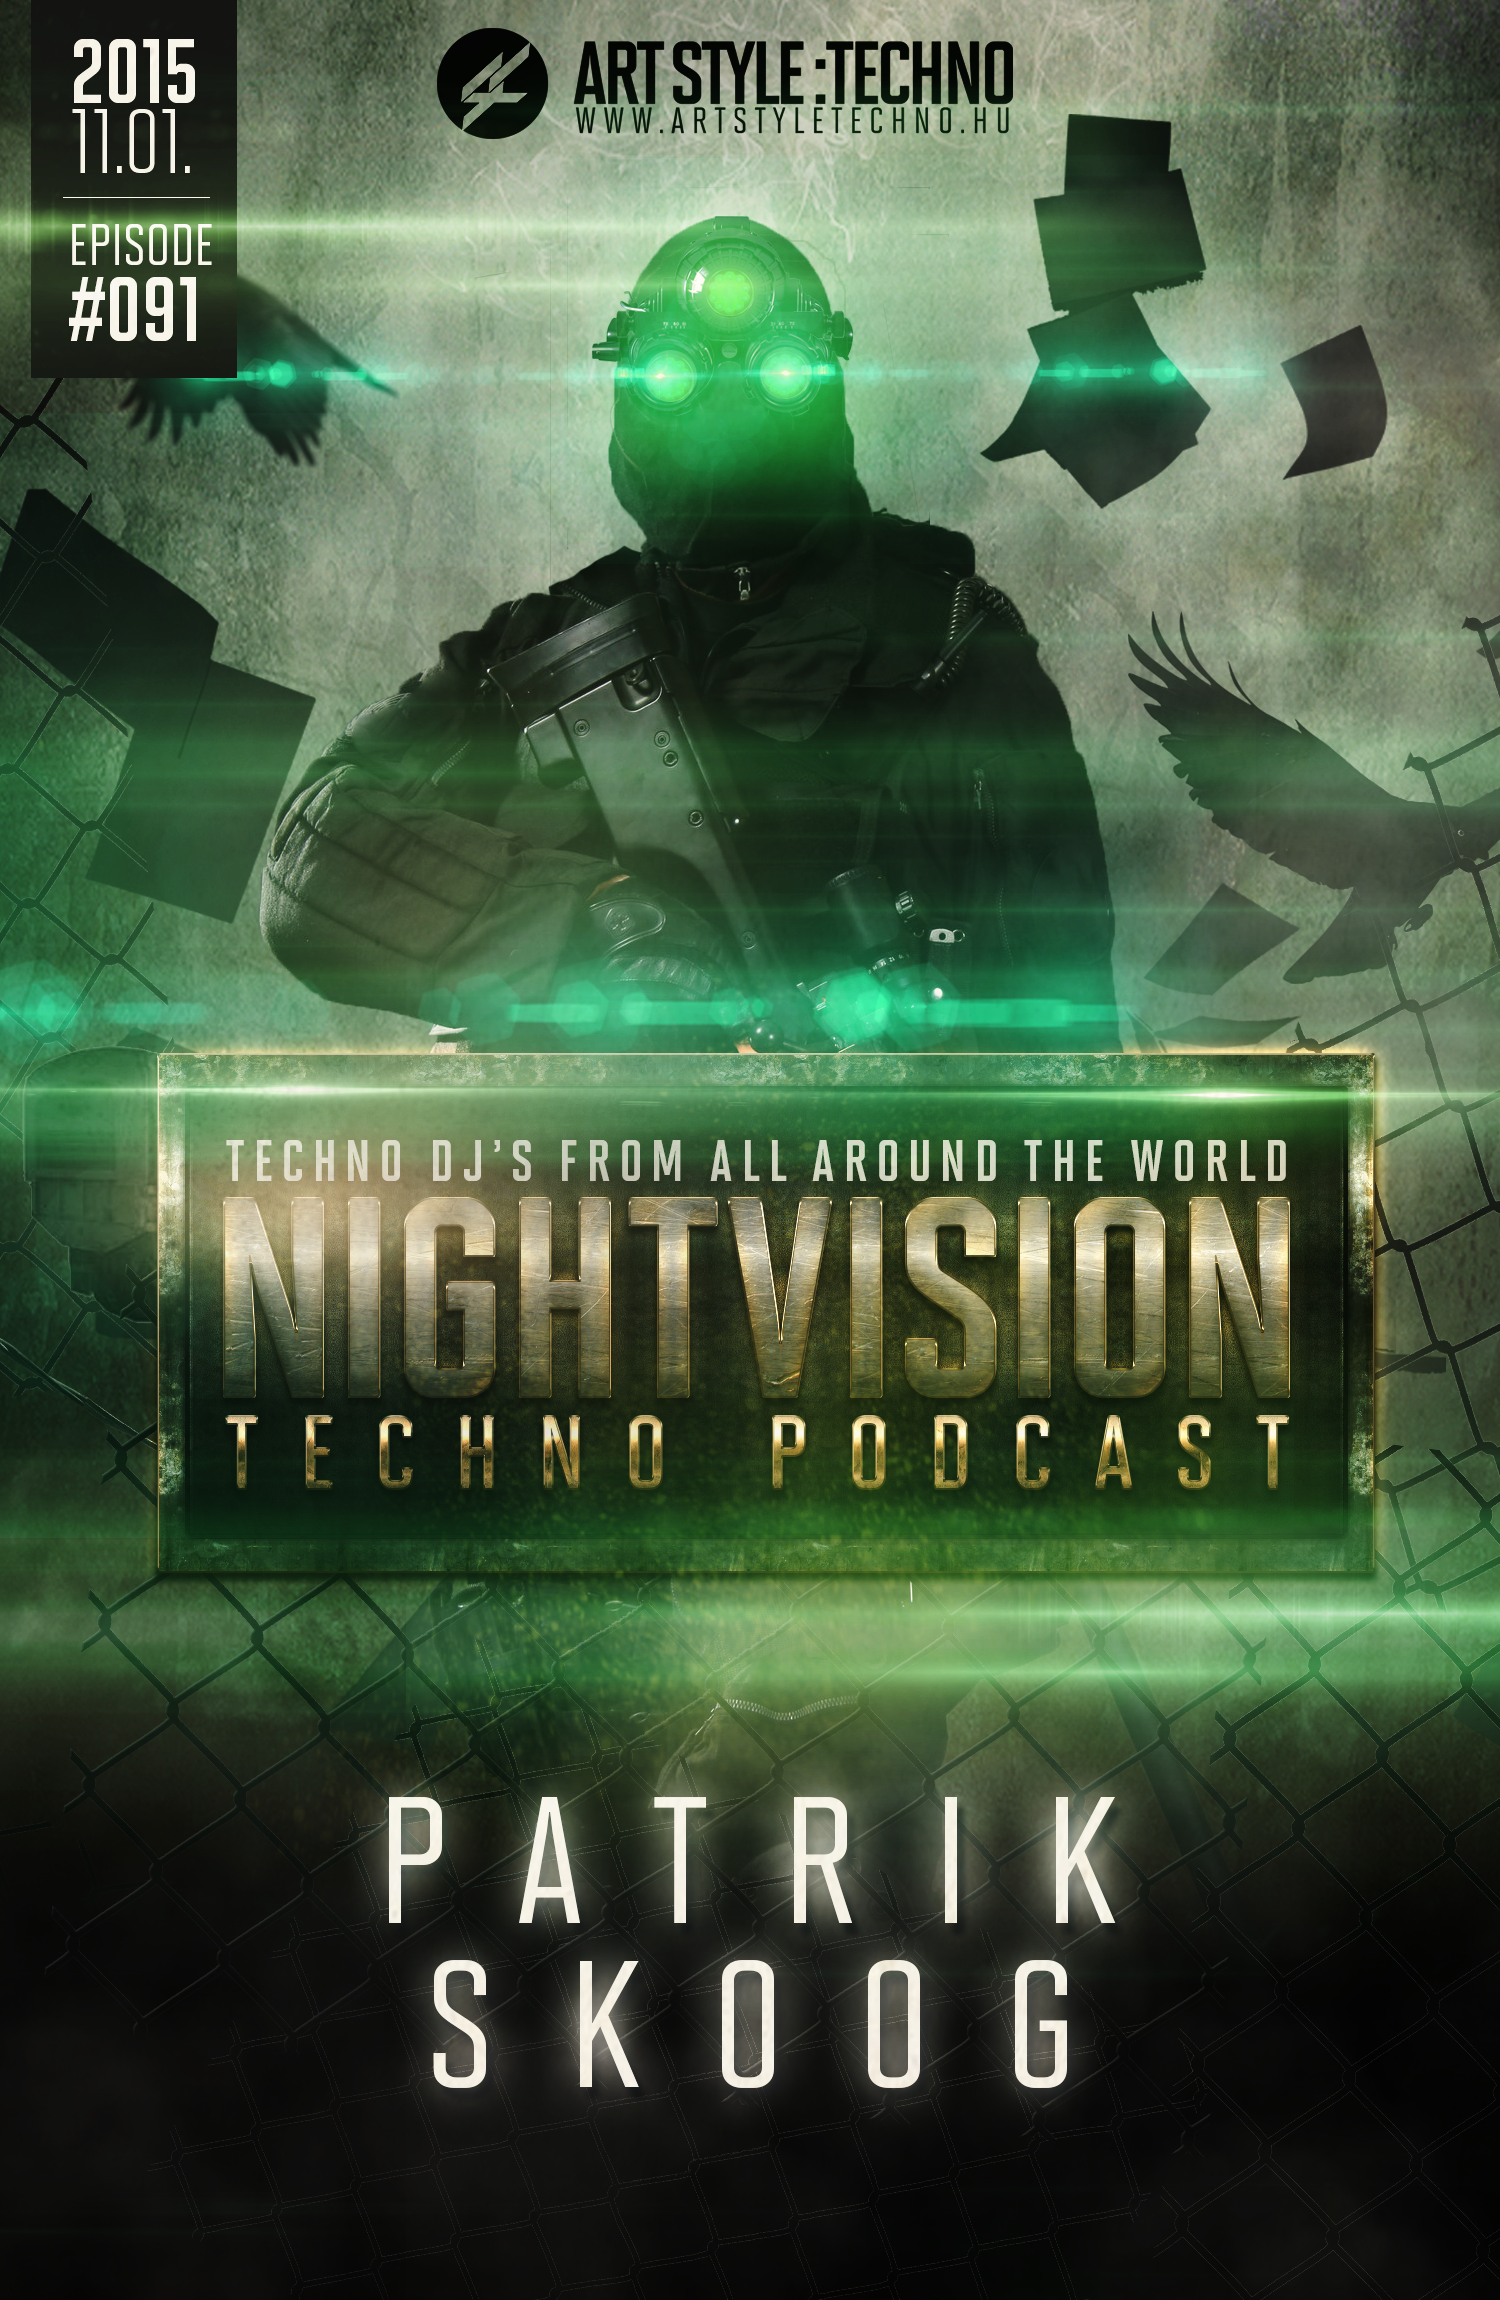 Patrik Skoog [DE] - NightVision Techno Podcast 91 Pt.2